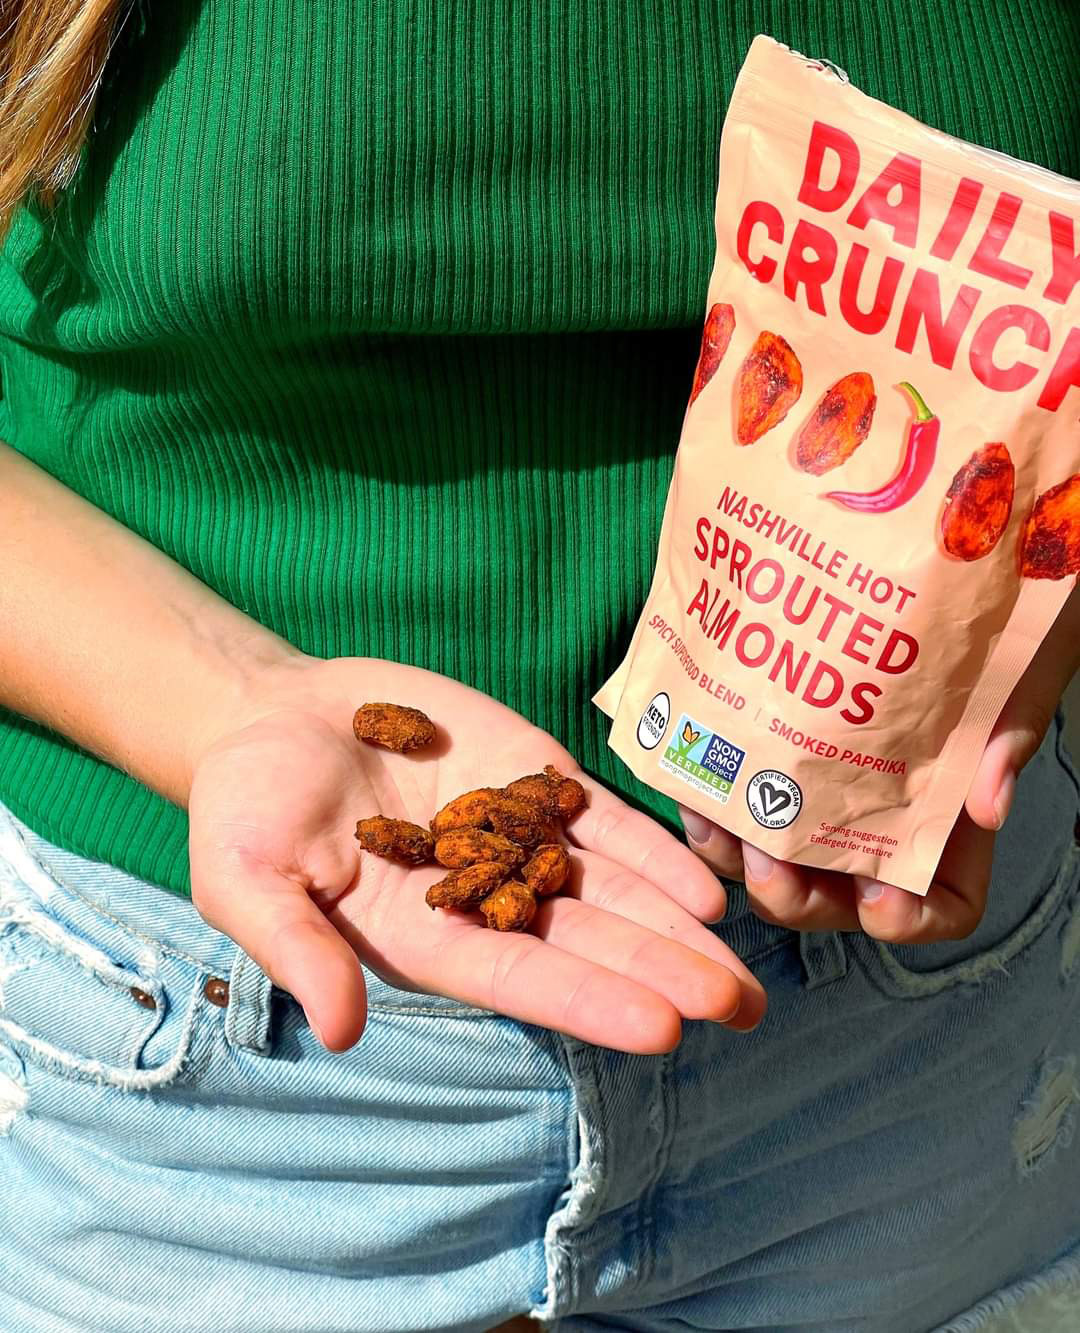 Daily Crunch